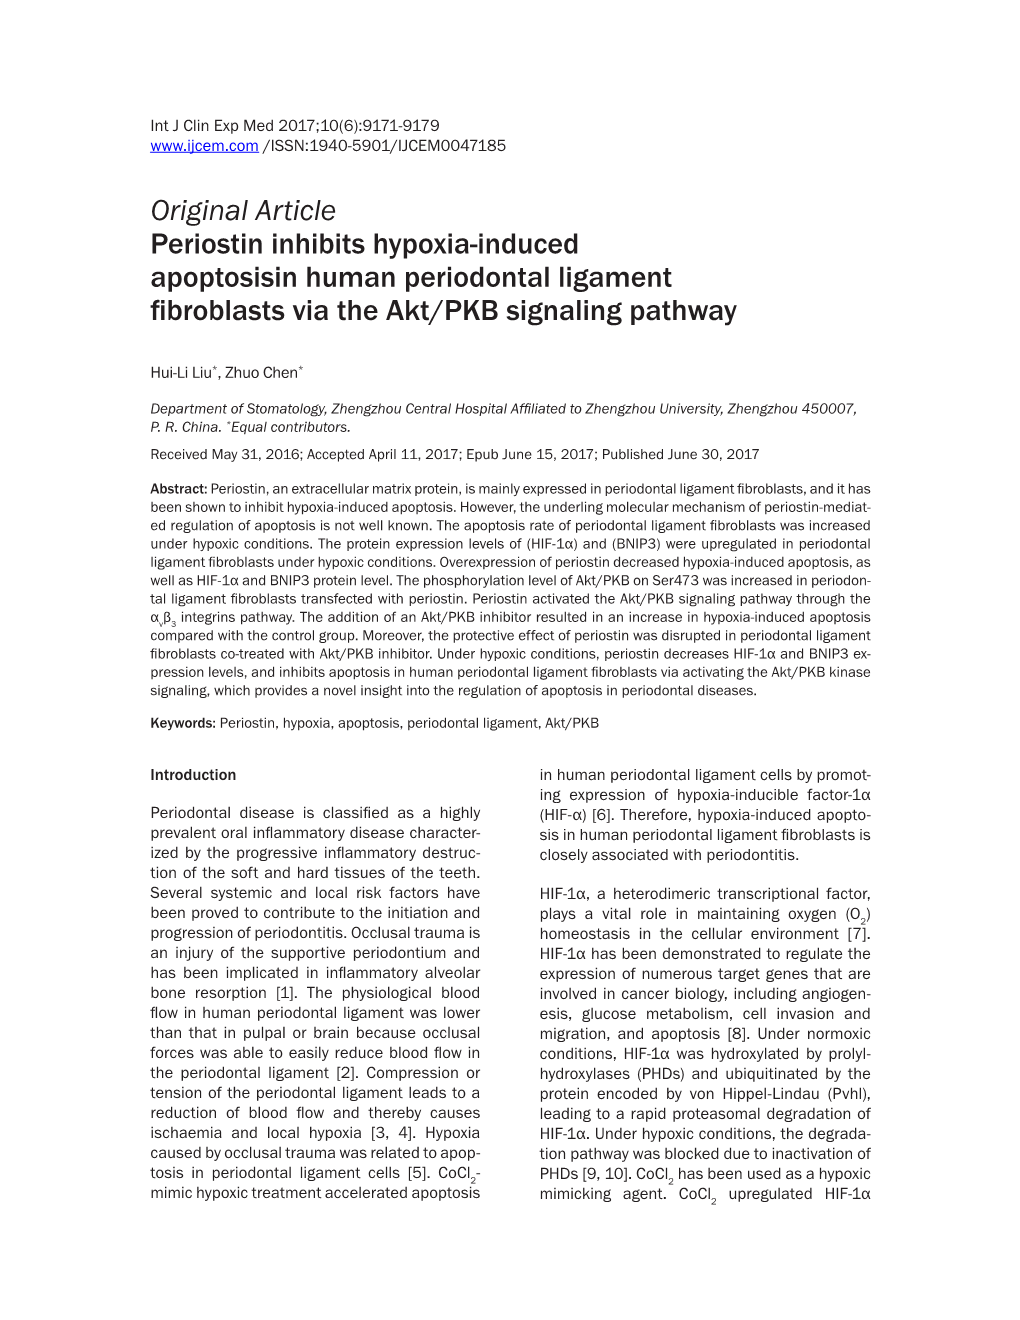 Original Article Periostin Inhibits Hypoxia-Induced Apoptosisin Human Periodontal Ligament Fibroblasts Via the Akt/PKB Signaling Pathway